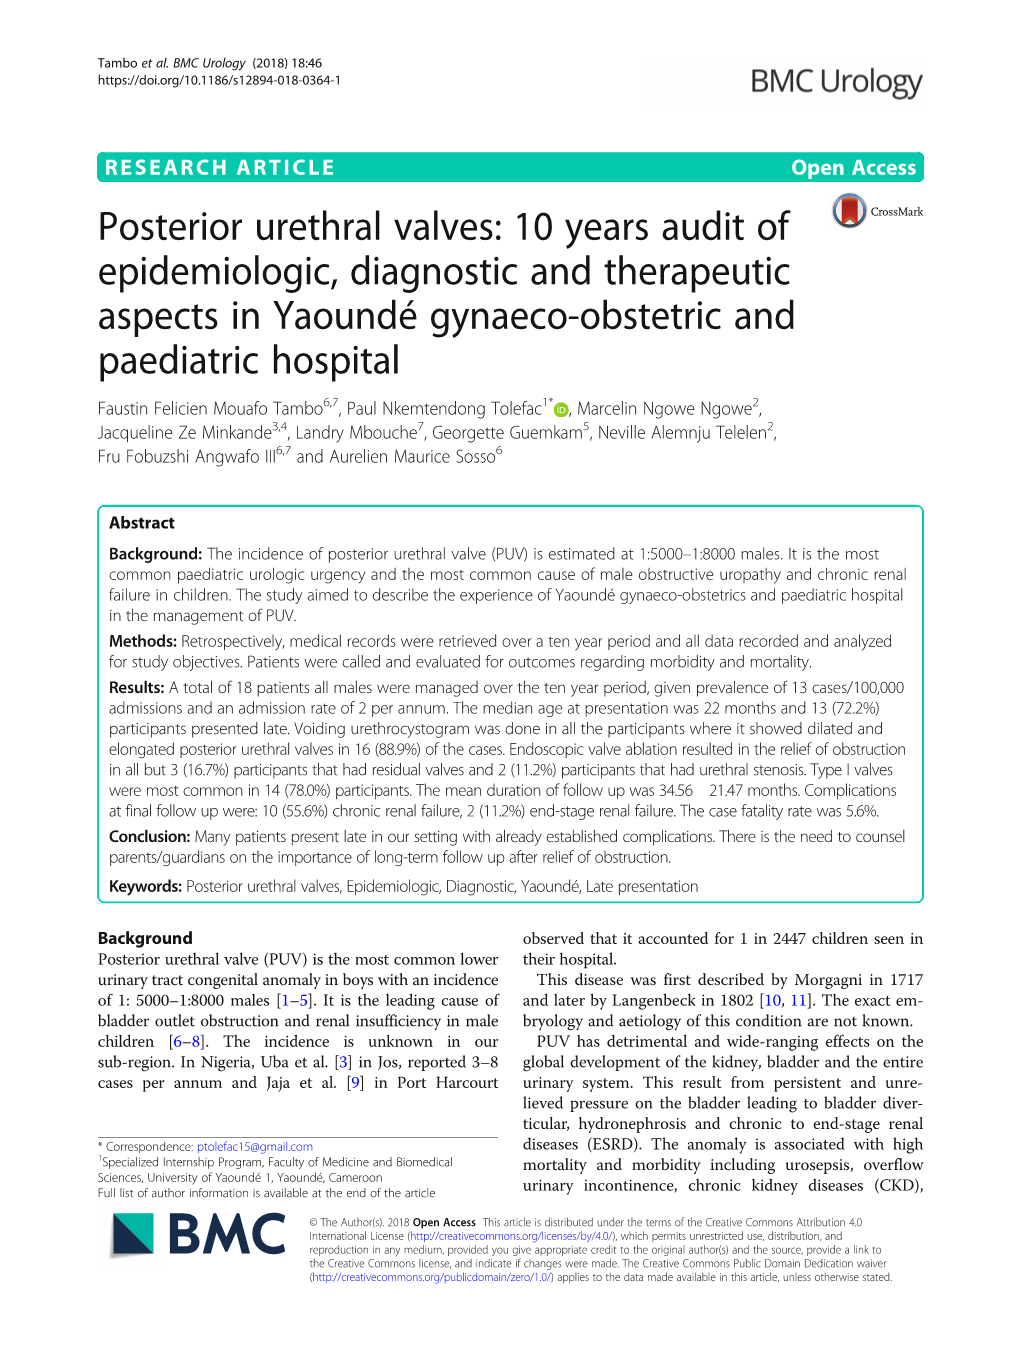 Posterior Urethral Valves: 10 Years Audit of Epidemiologic, Diagnostic